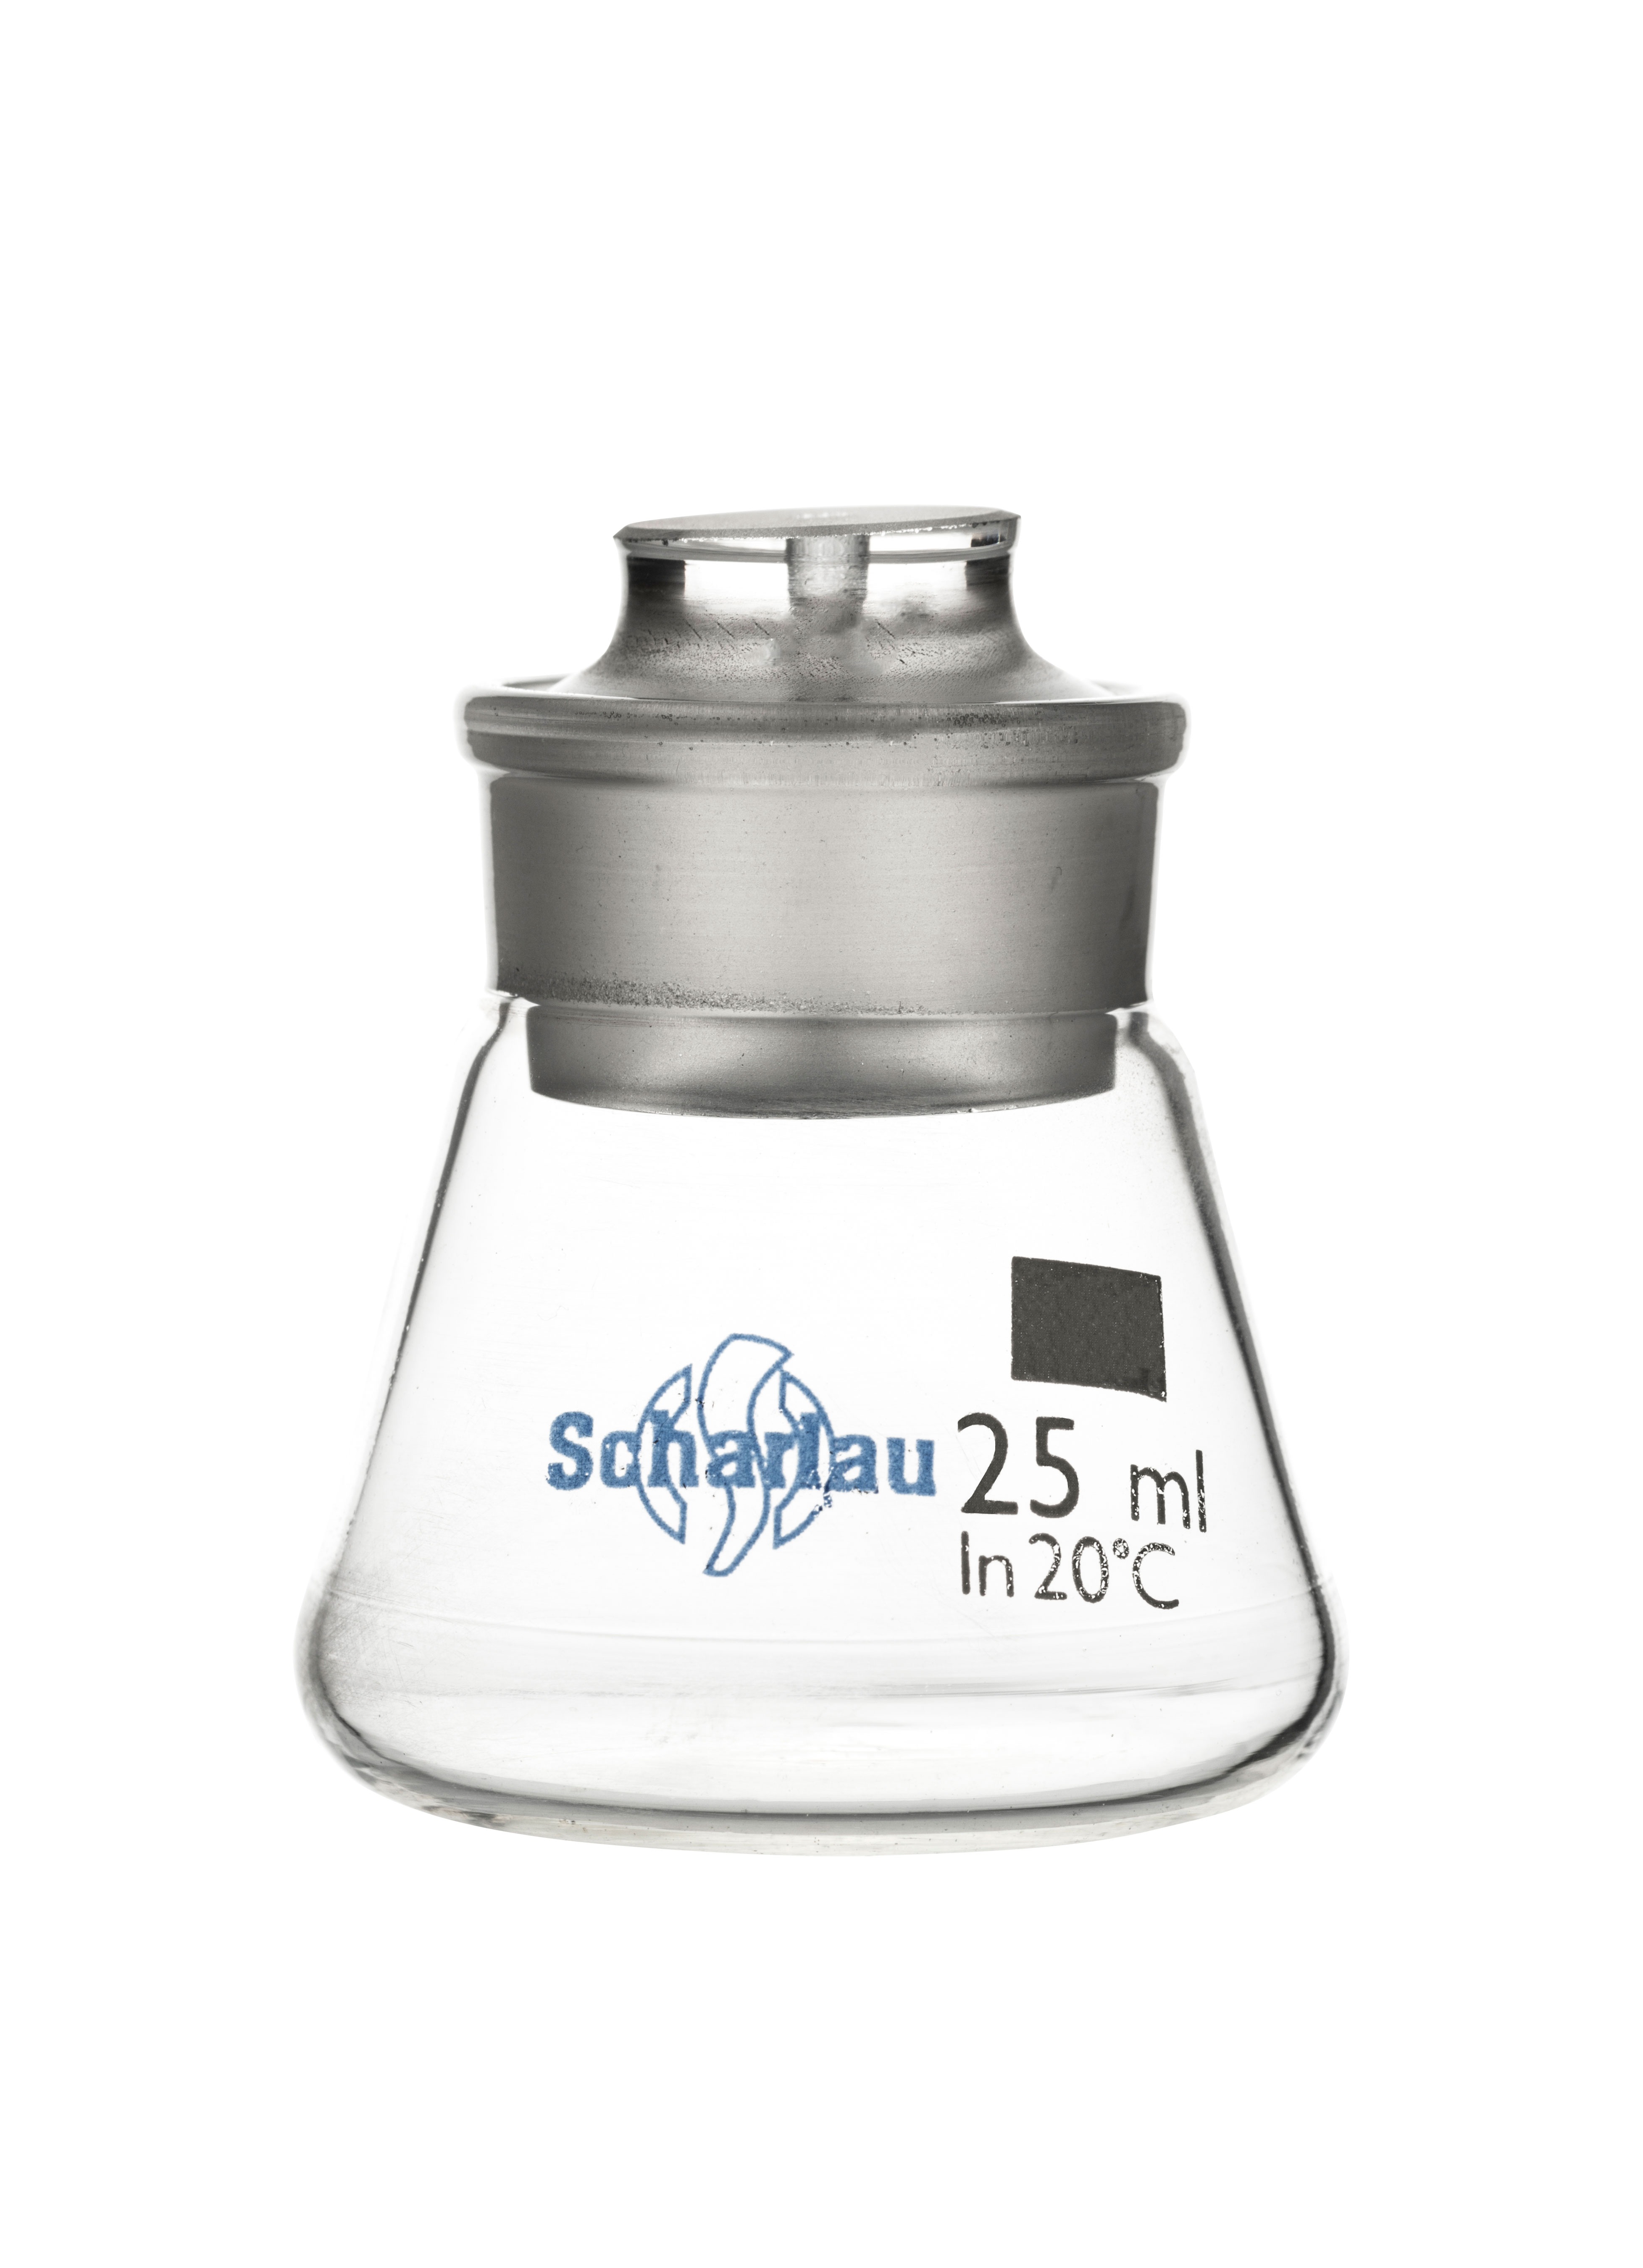 Picnometro  Hubbard 24/30 ml  (2) ASTM  D70 Scharlau 